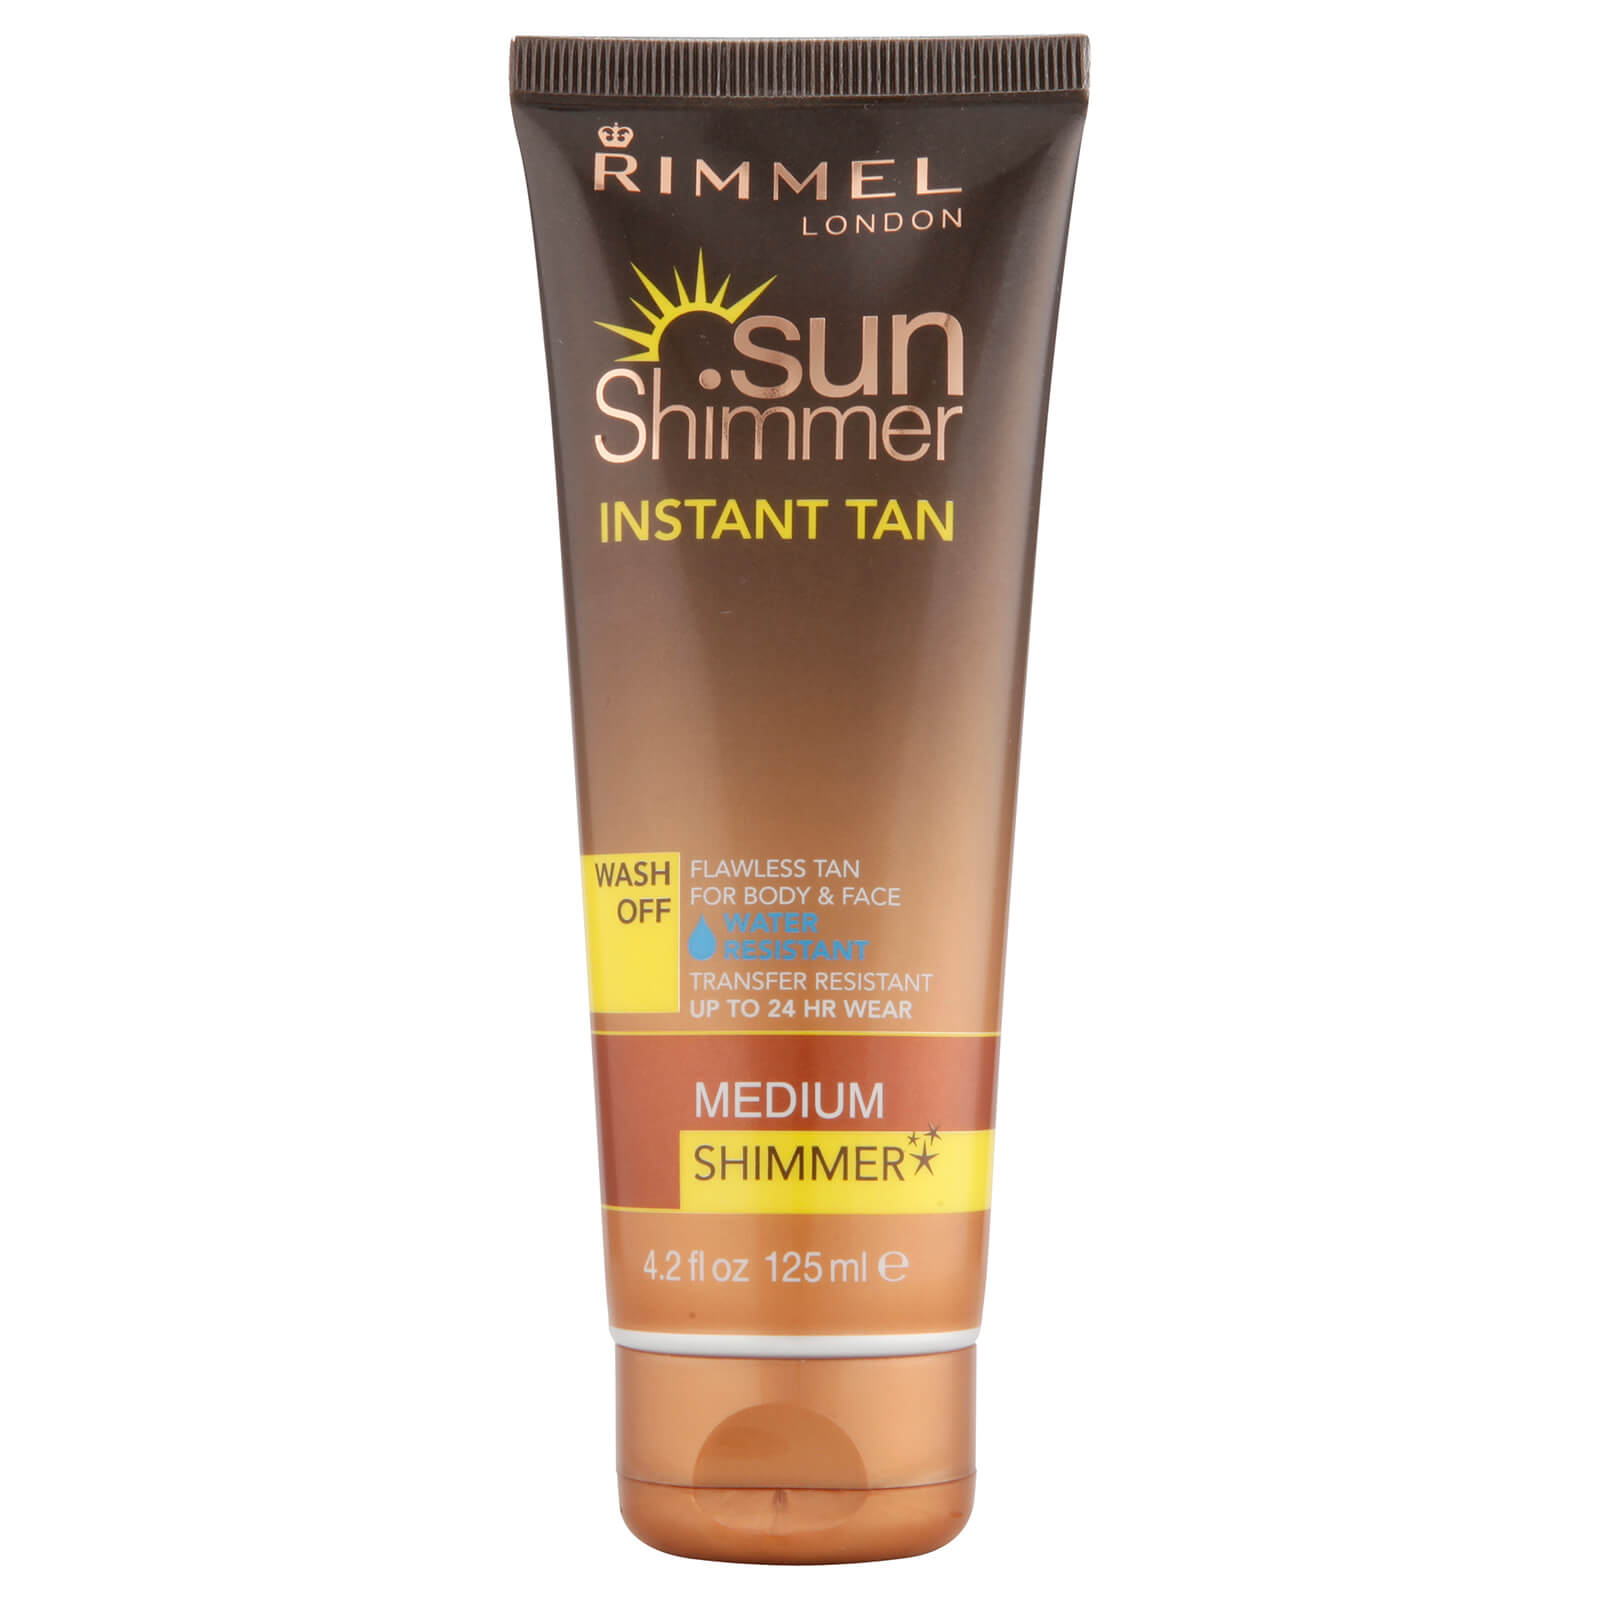 Rimmel Sunshimmer Water Resistant Wash Off Instant Tan - Shimmer (125ml) - Medium Shimmer